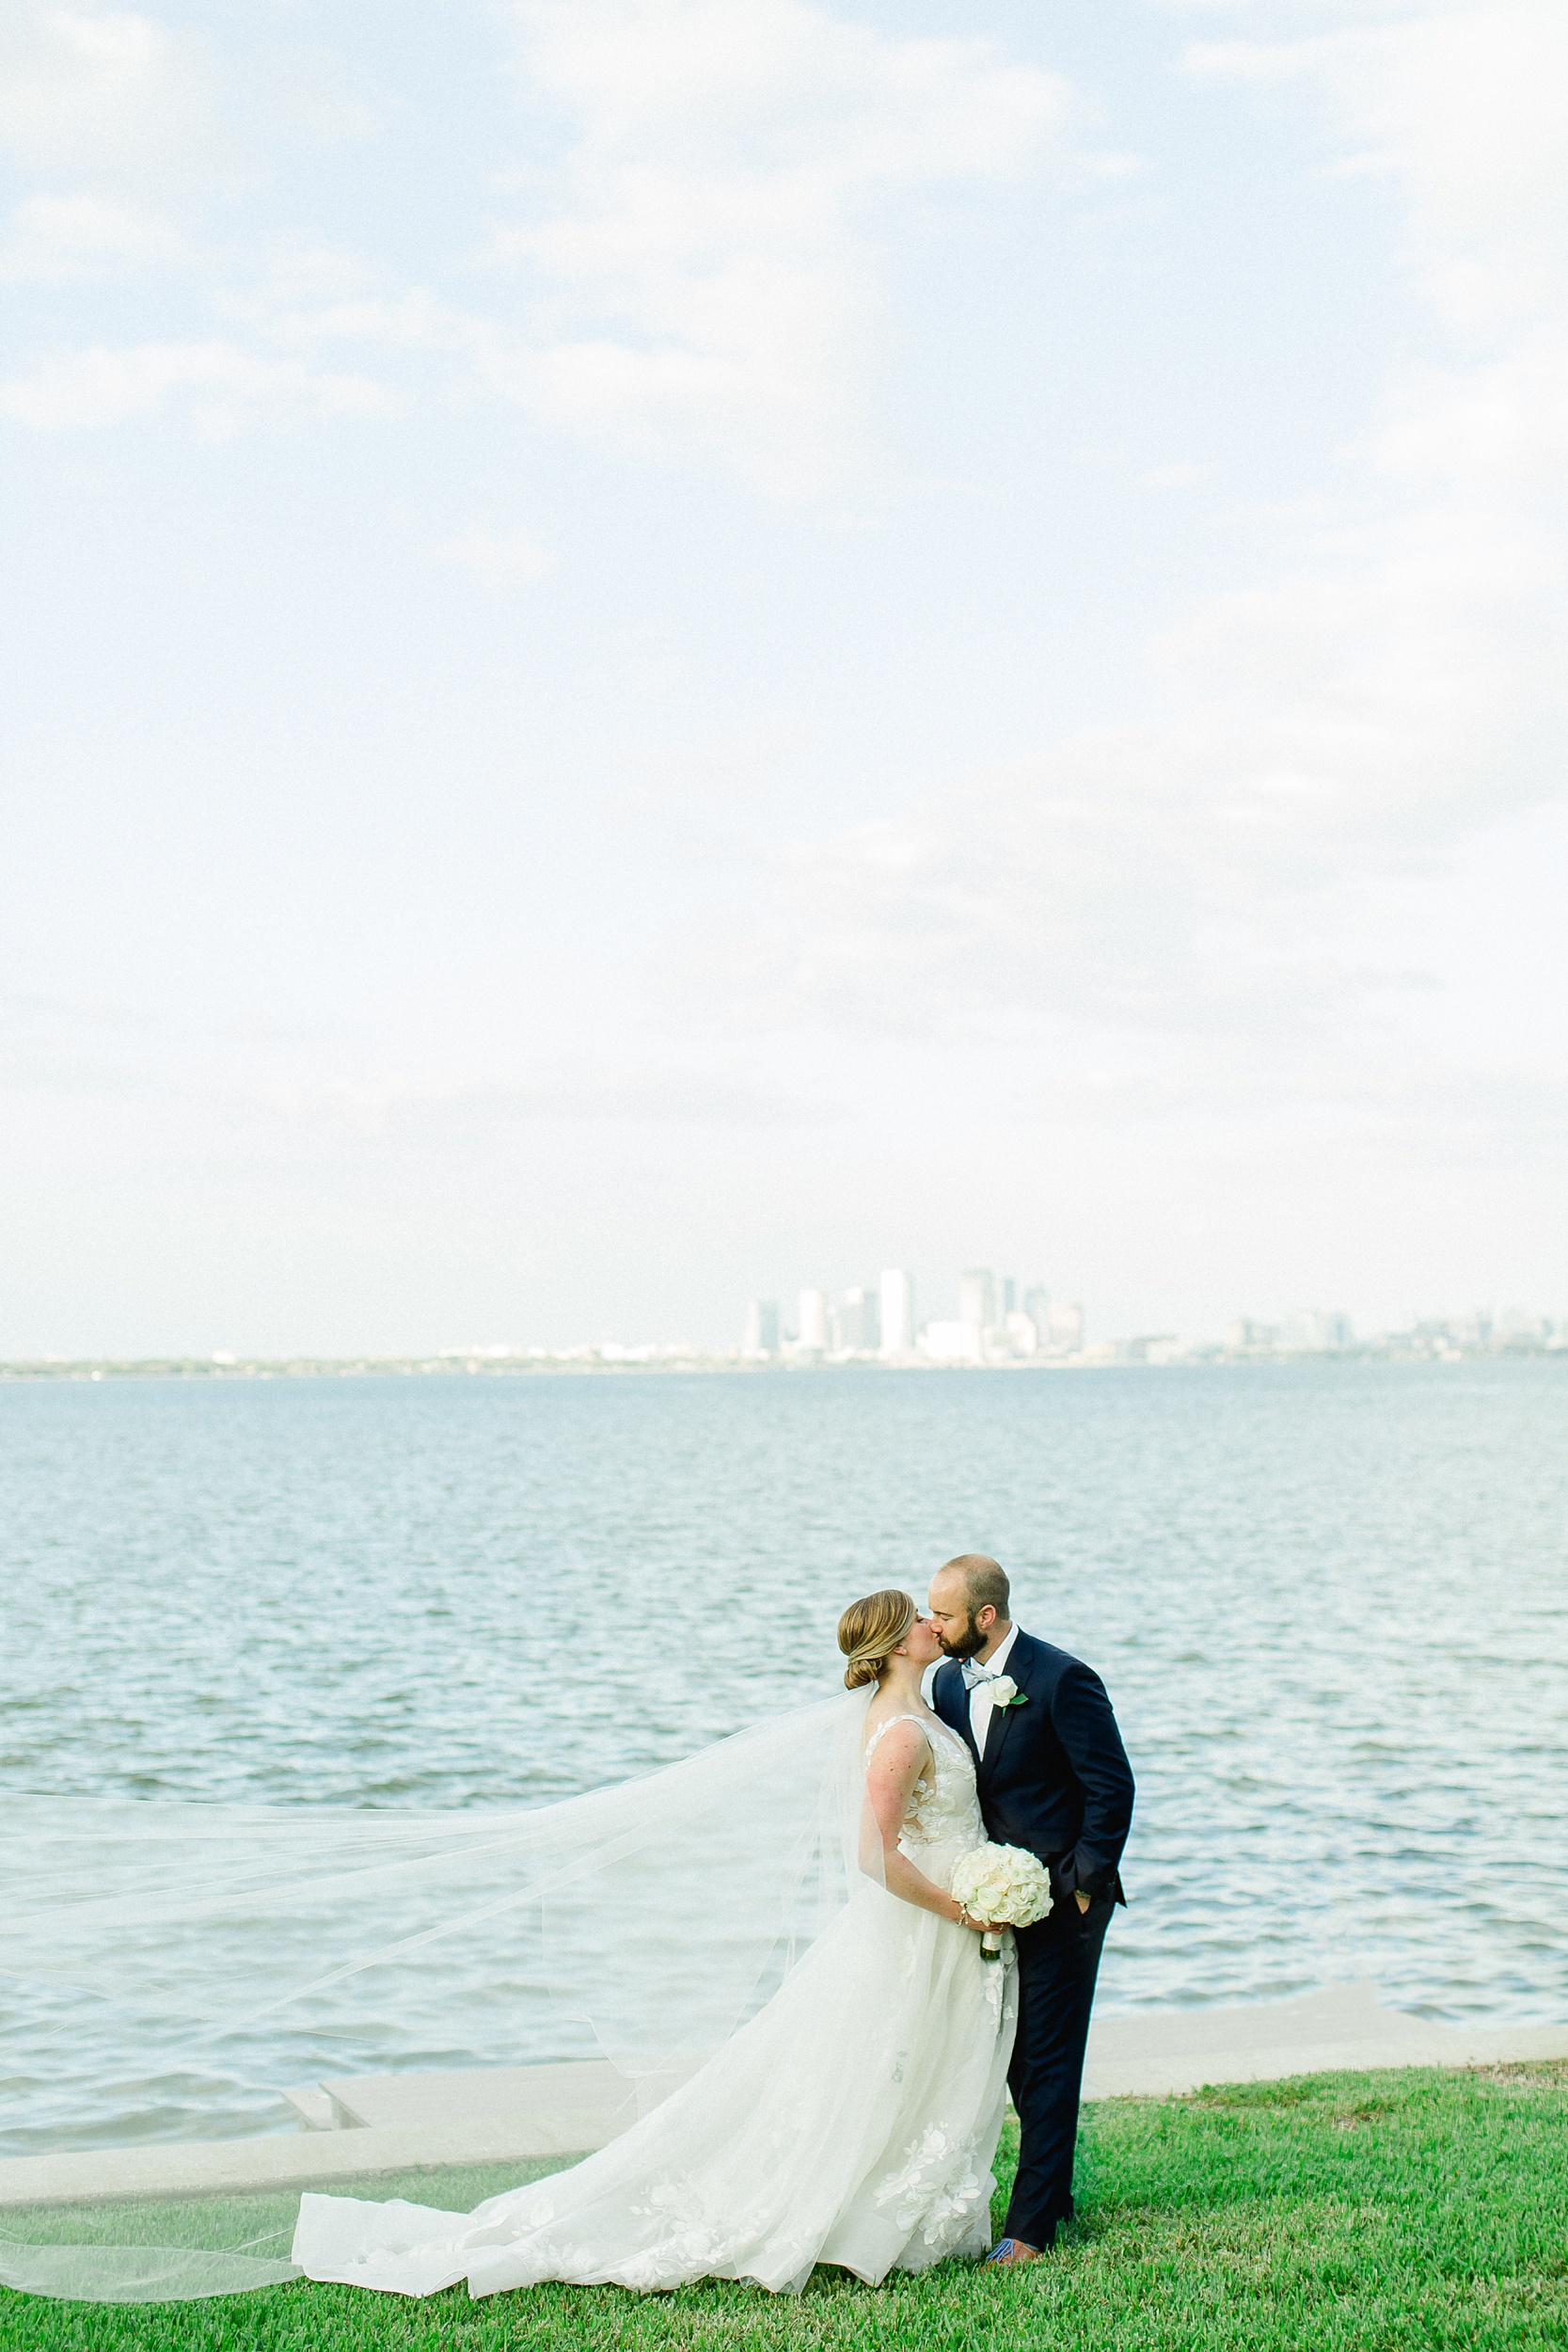 Tampa Yacht Club Wedding | © Ailyn La Torre Photography 2020